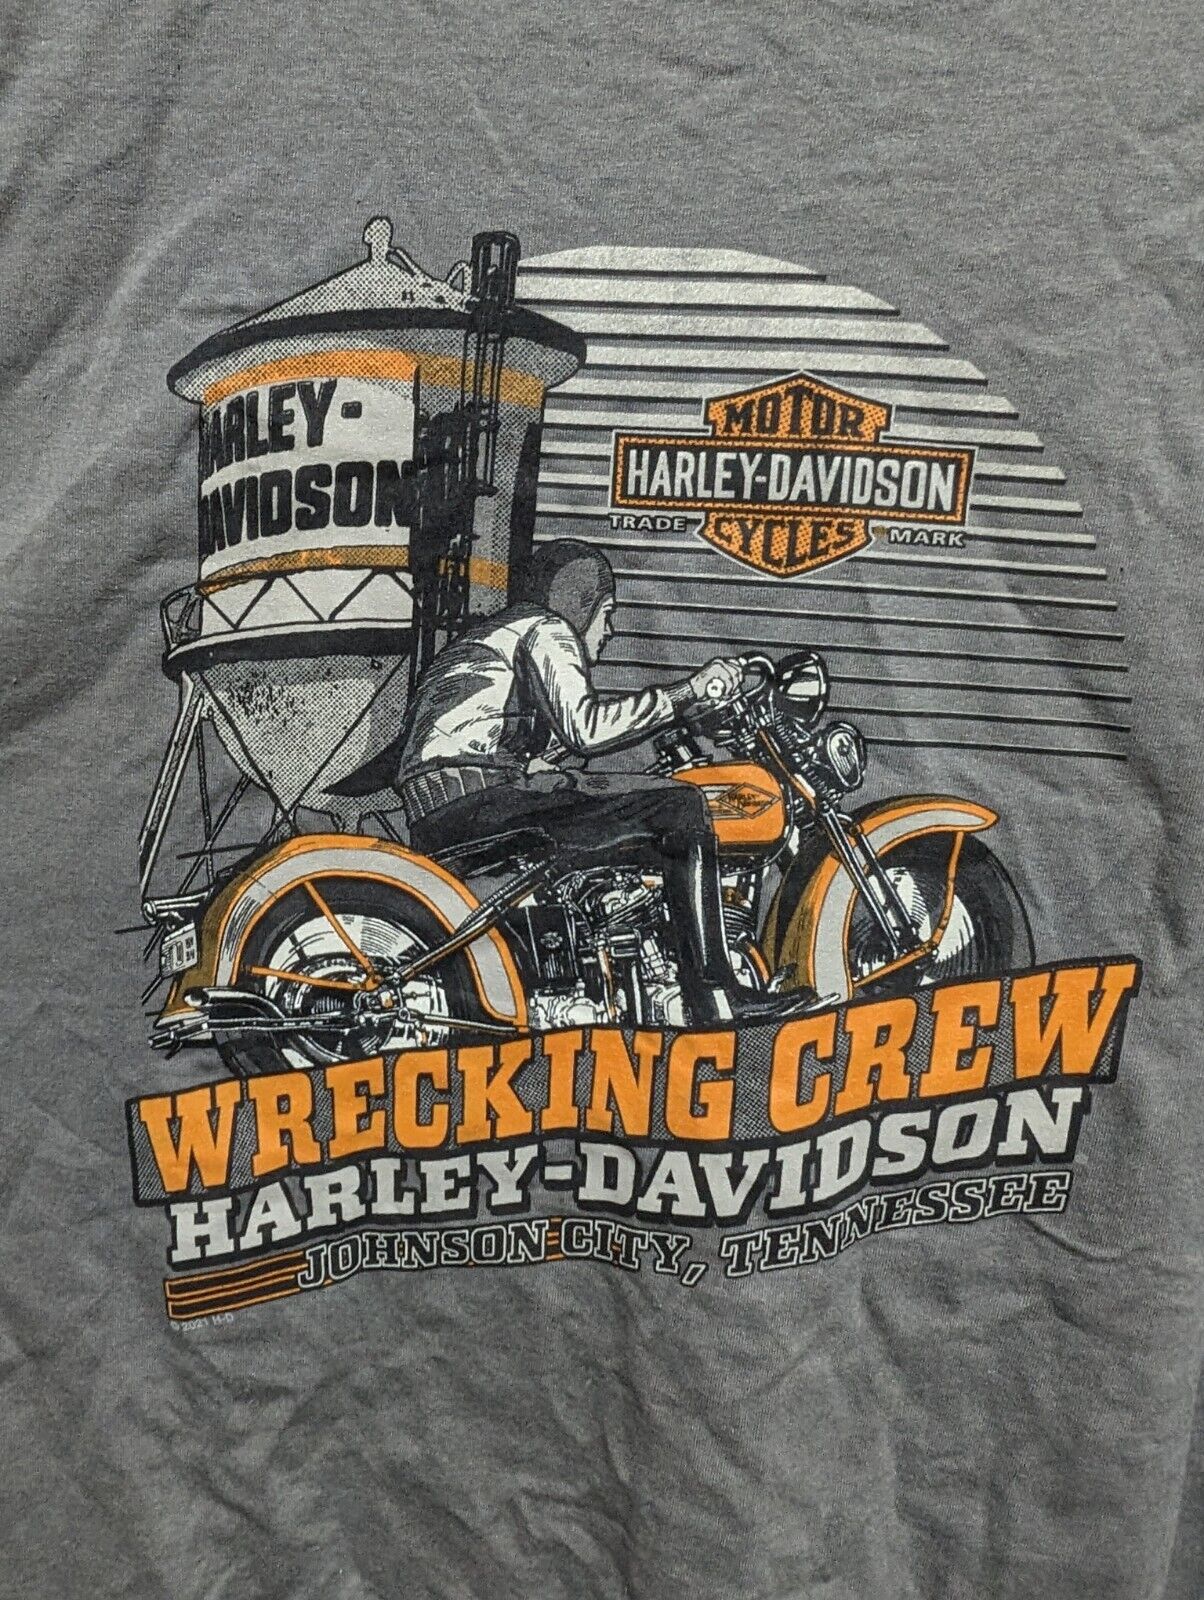 NWT Harley Davidson Johnson City TN Pocket T Shirt Shirt Gray 3xl Wrecking Crew 